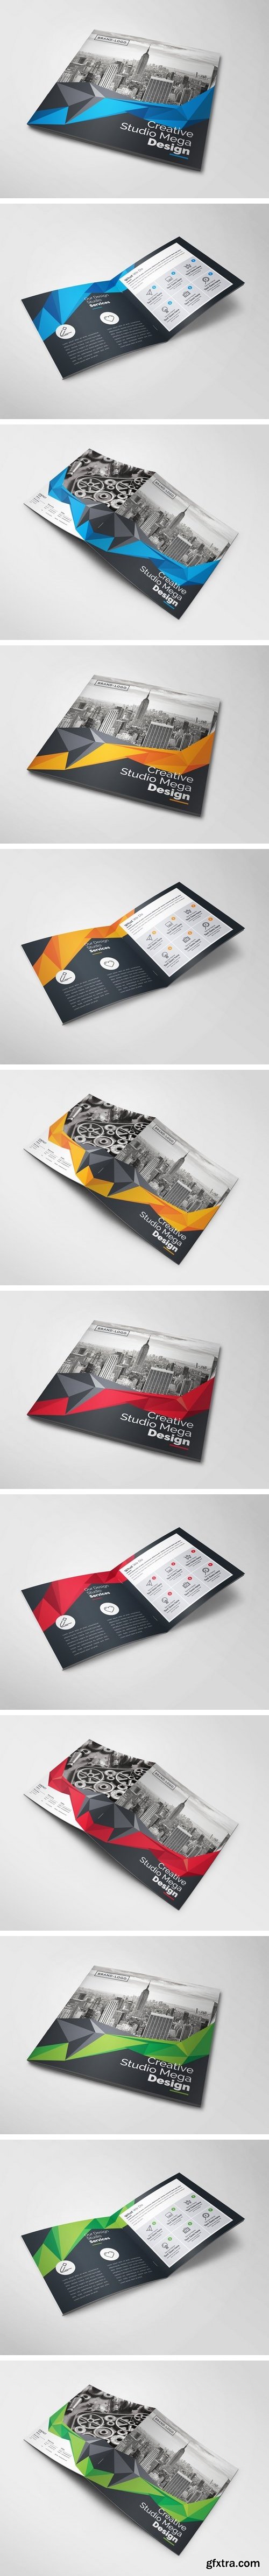 CM - Creative Square Bi-Fold Brochure 2064331